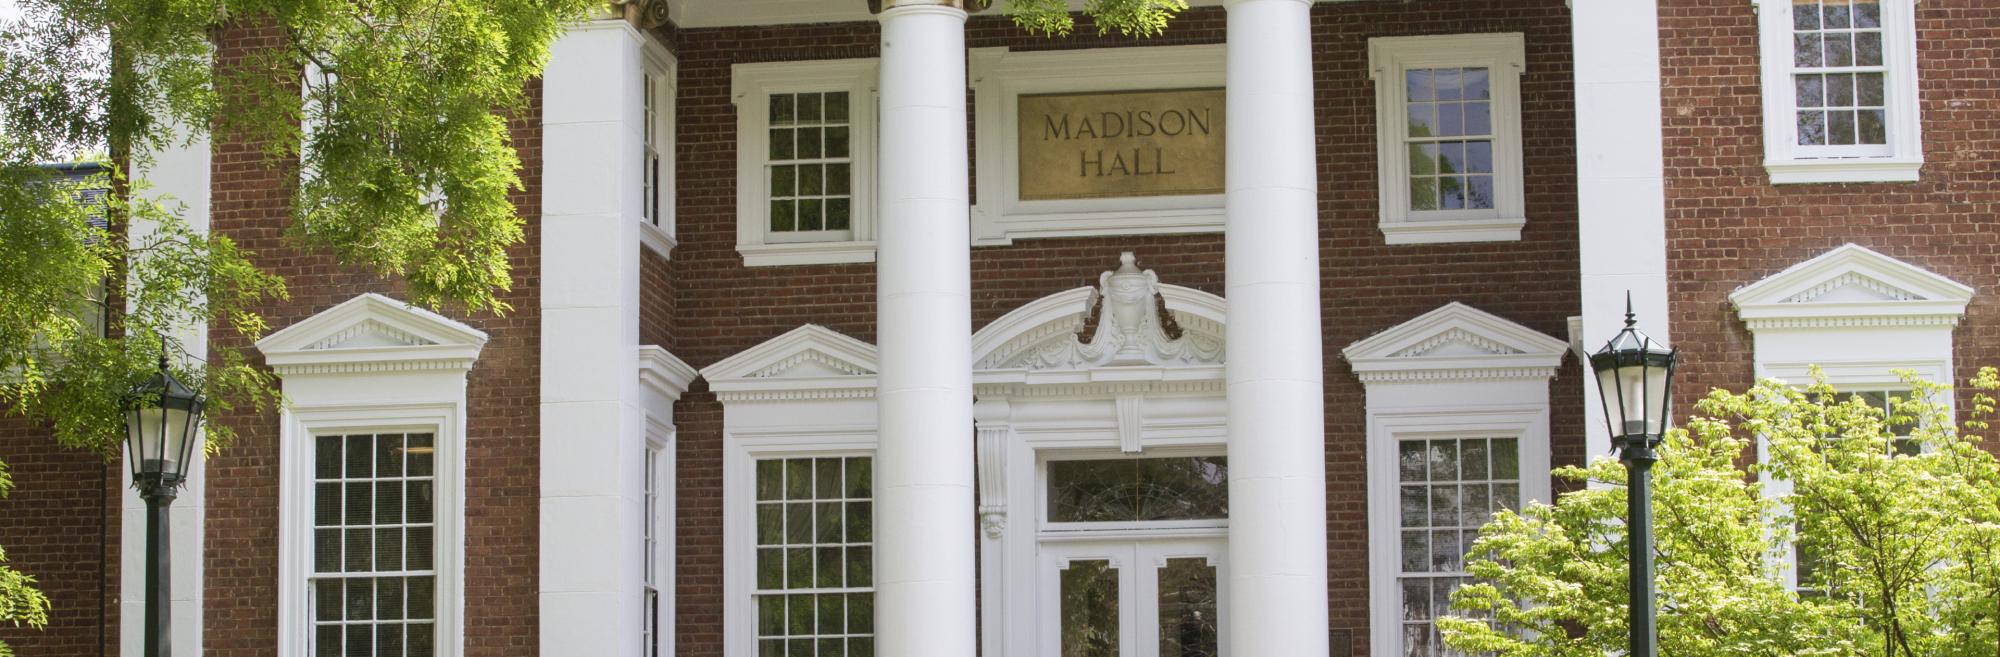 Madison hall